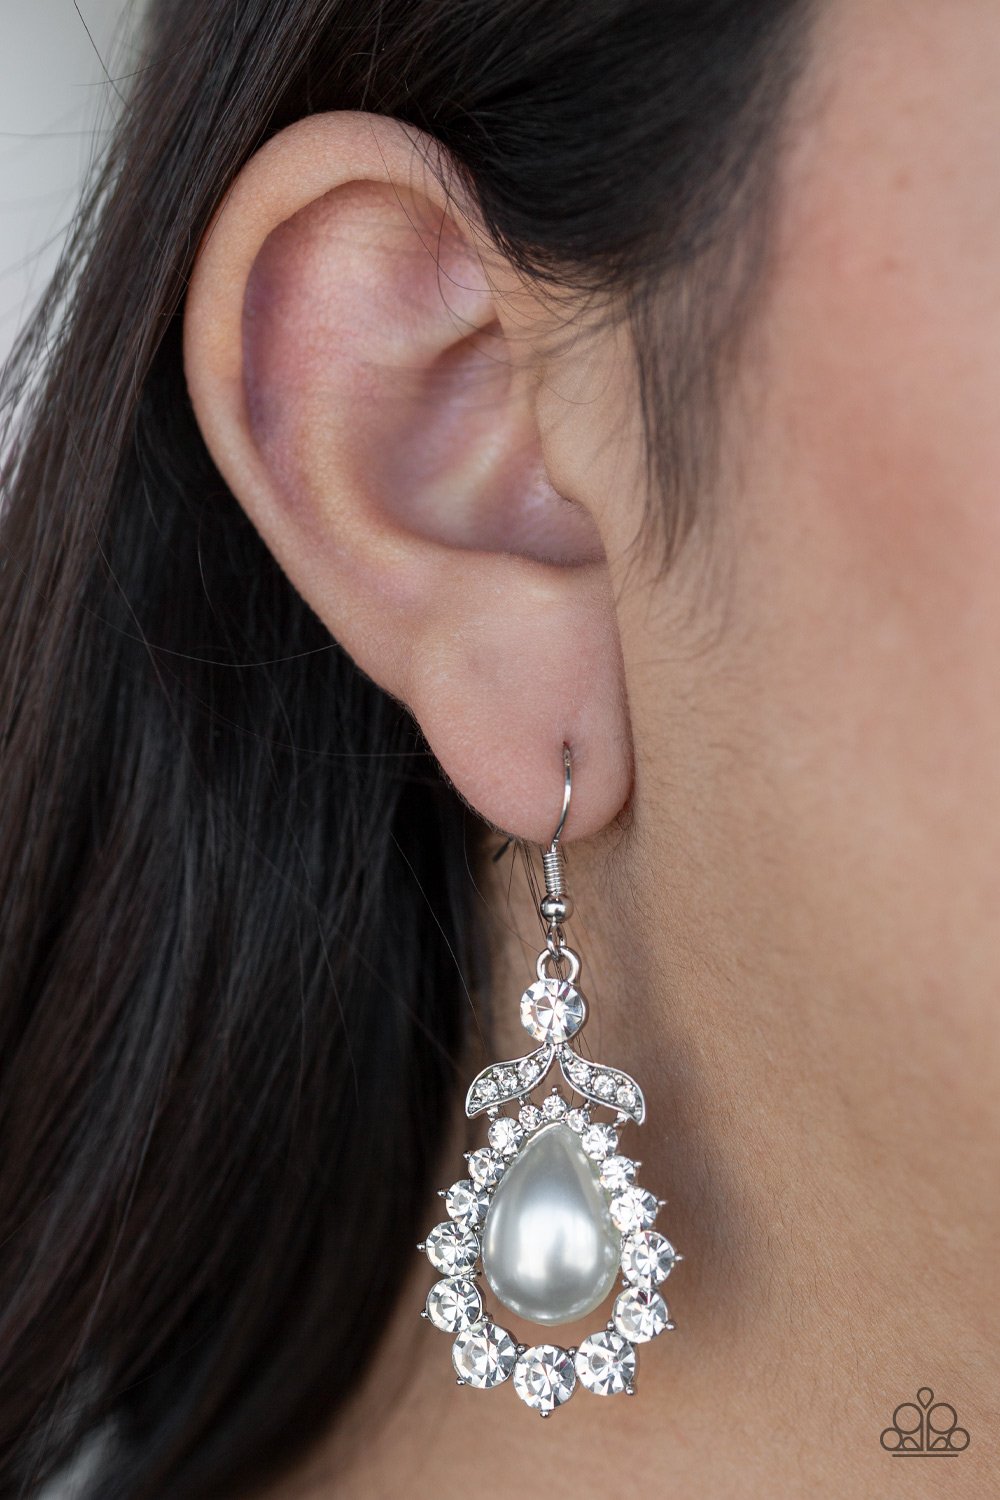 Award Winning Shimmer-white-Paparazzi earrings